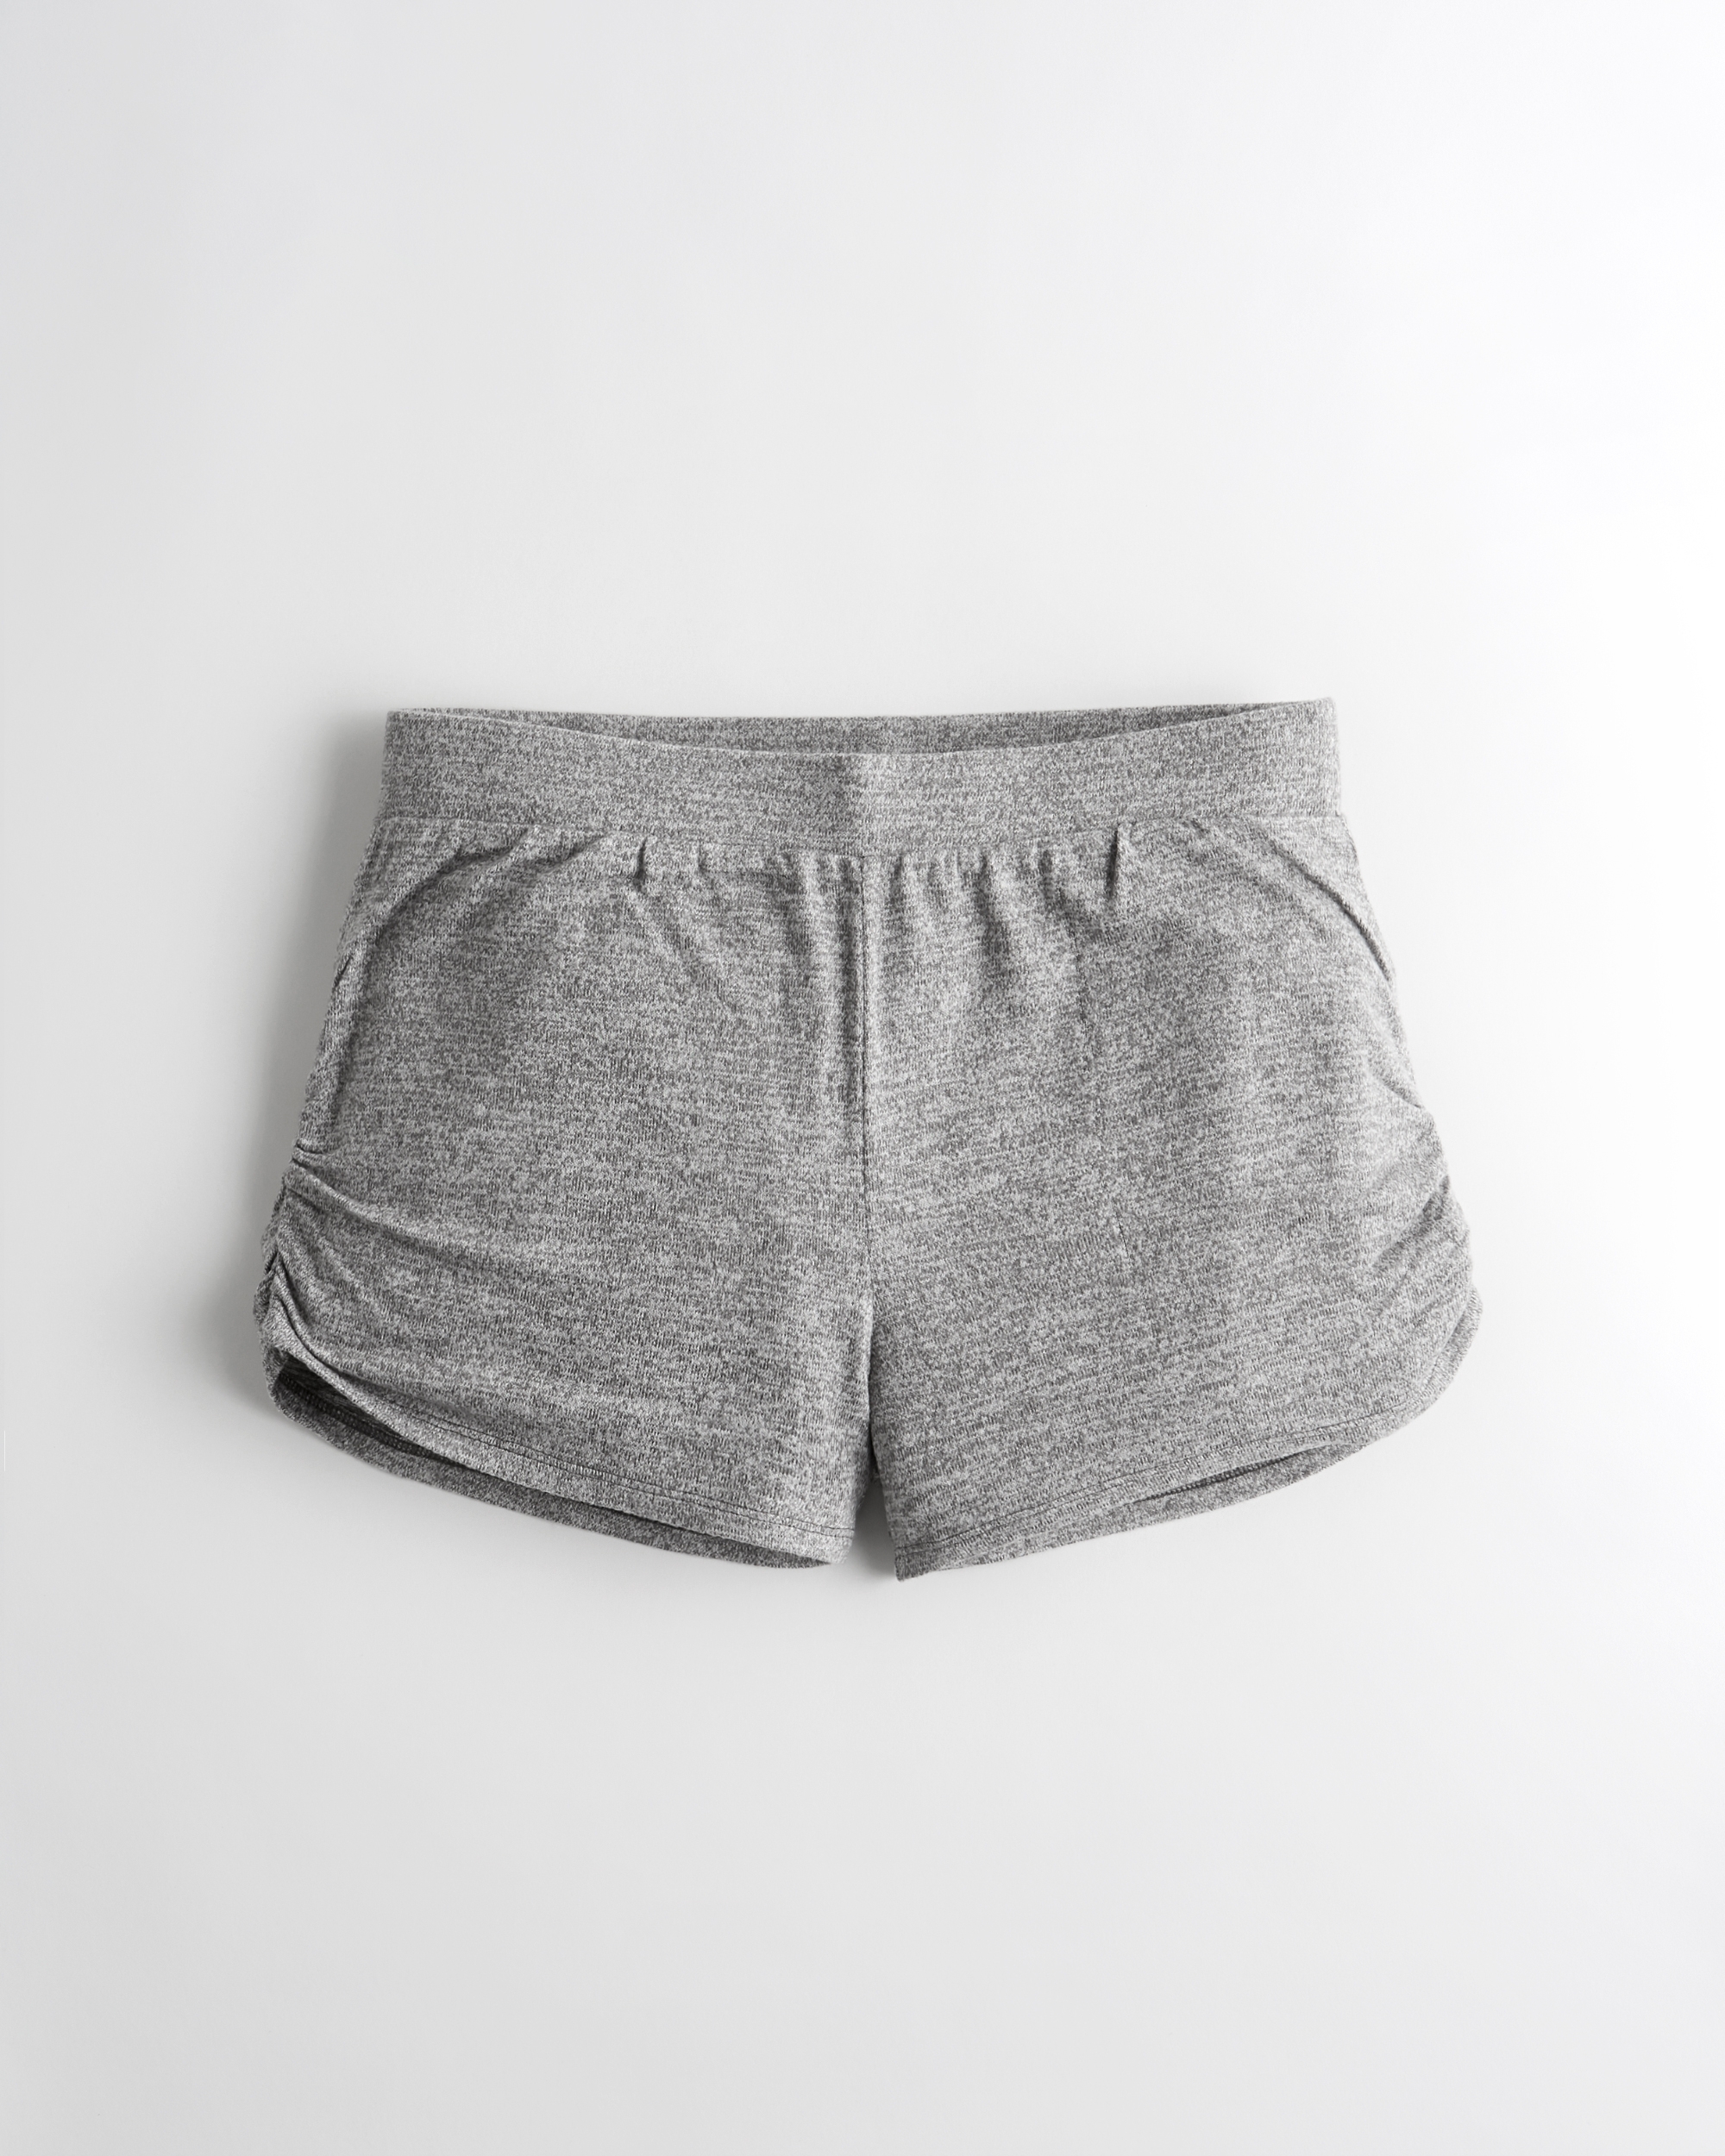 hollister comfy shorts